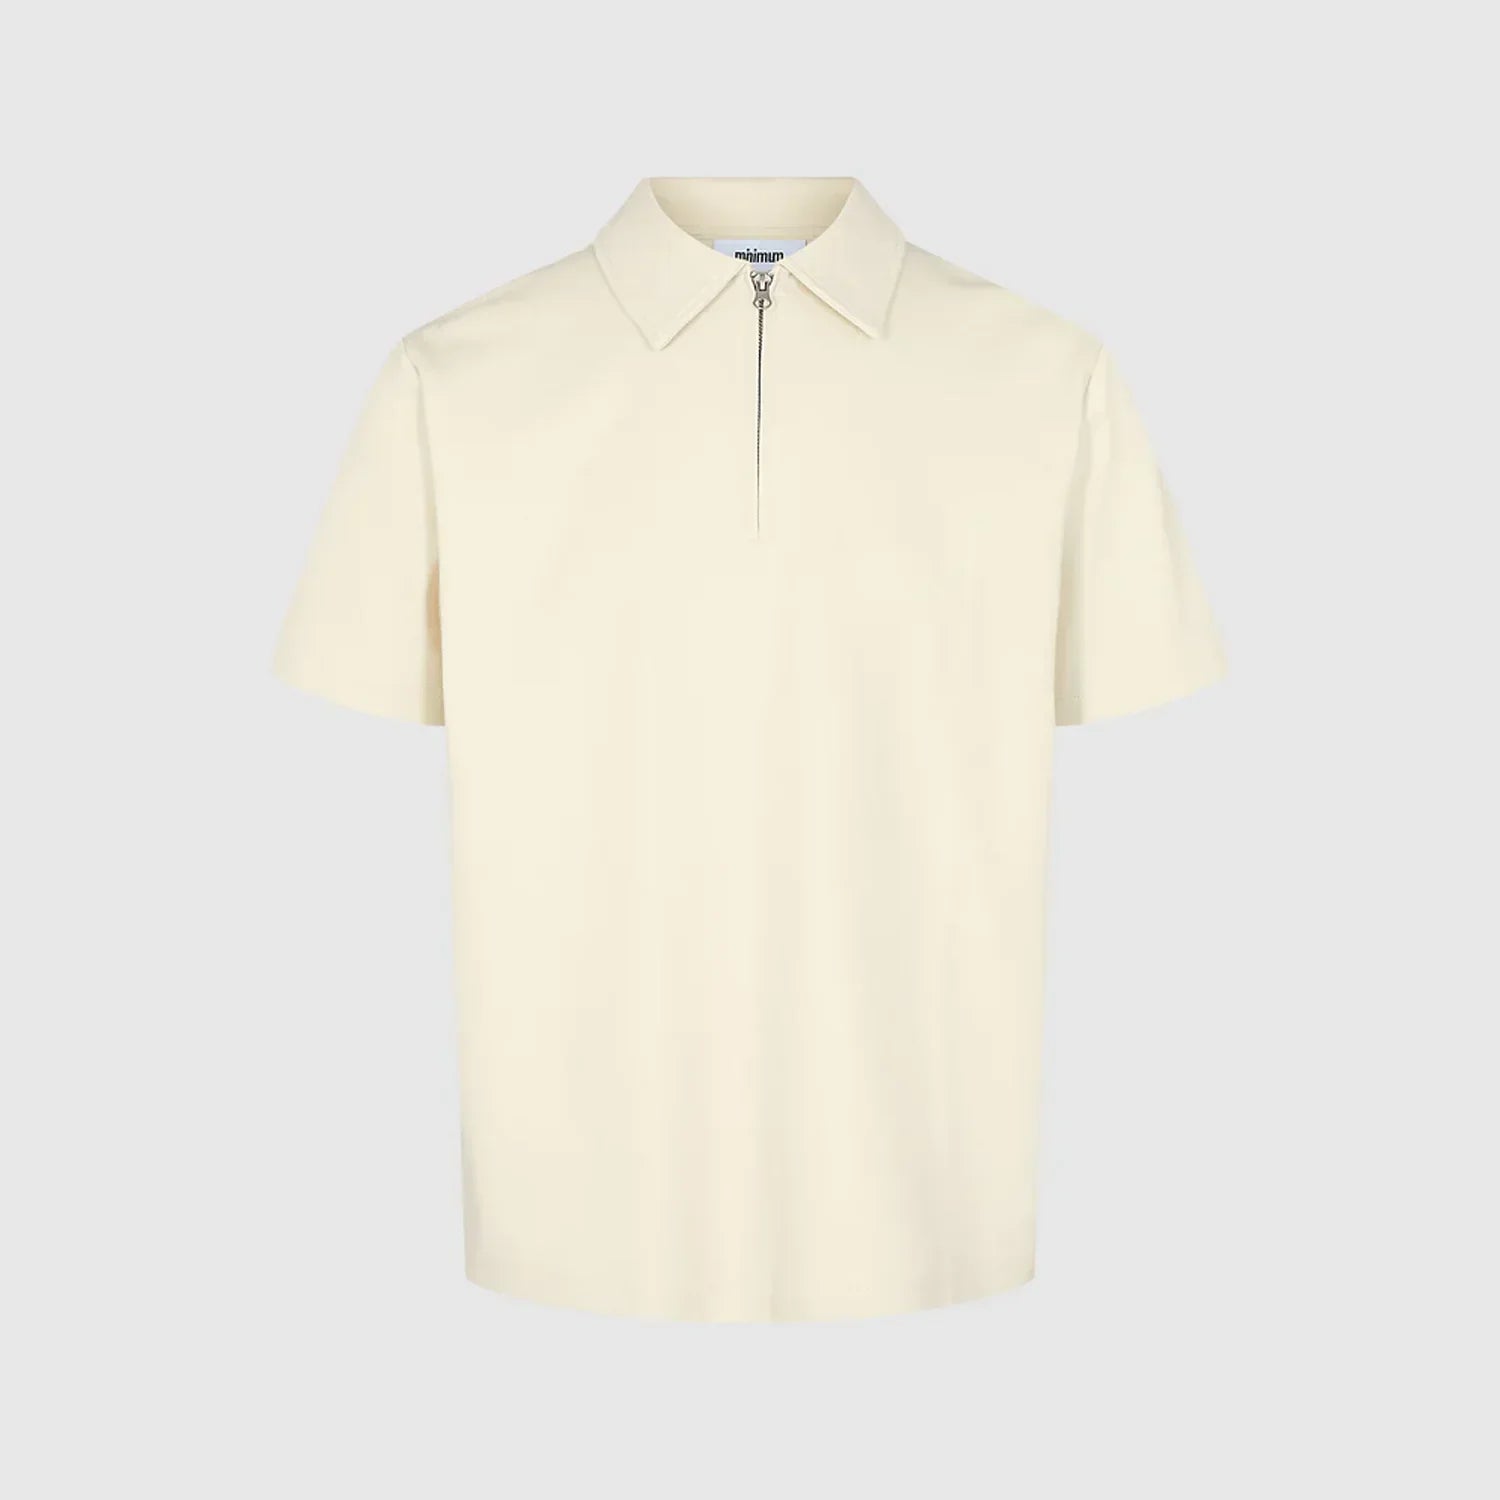 'MINIMUM Jesso 9765 Polo Shirt' in 'White Asparagus' colour